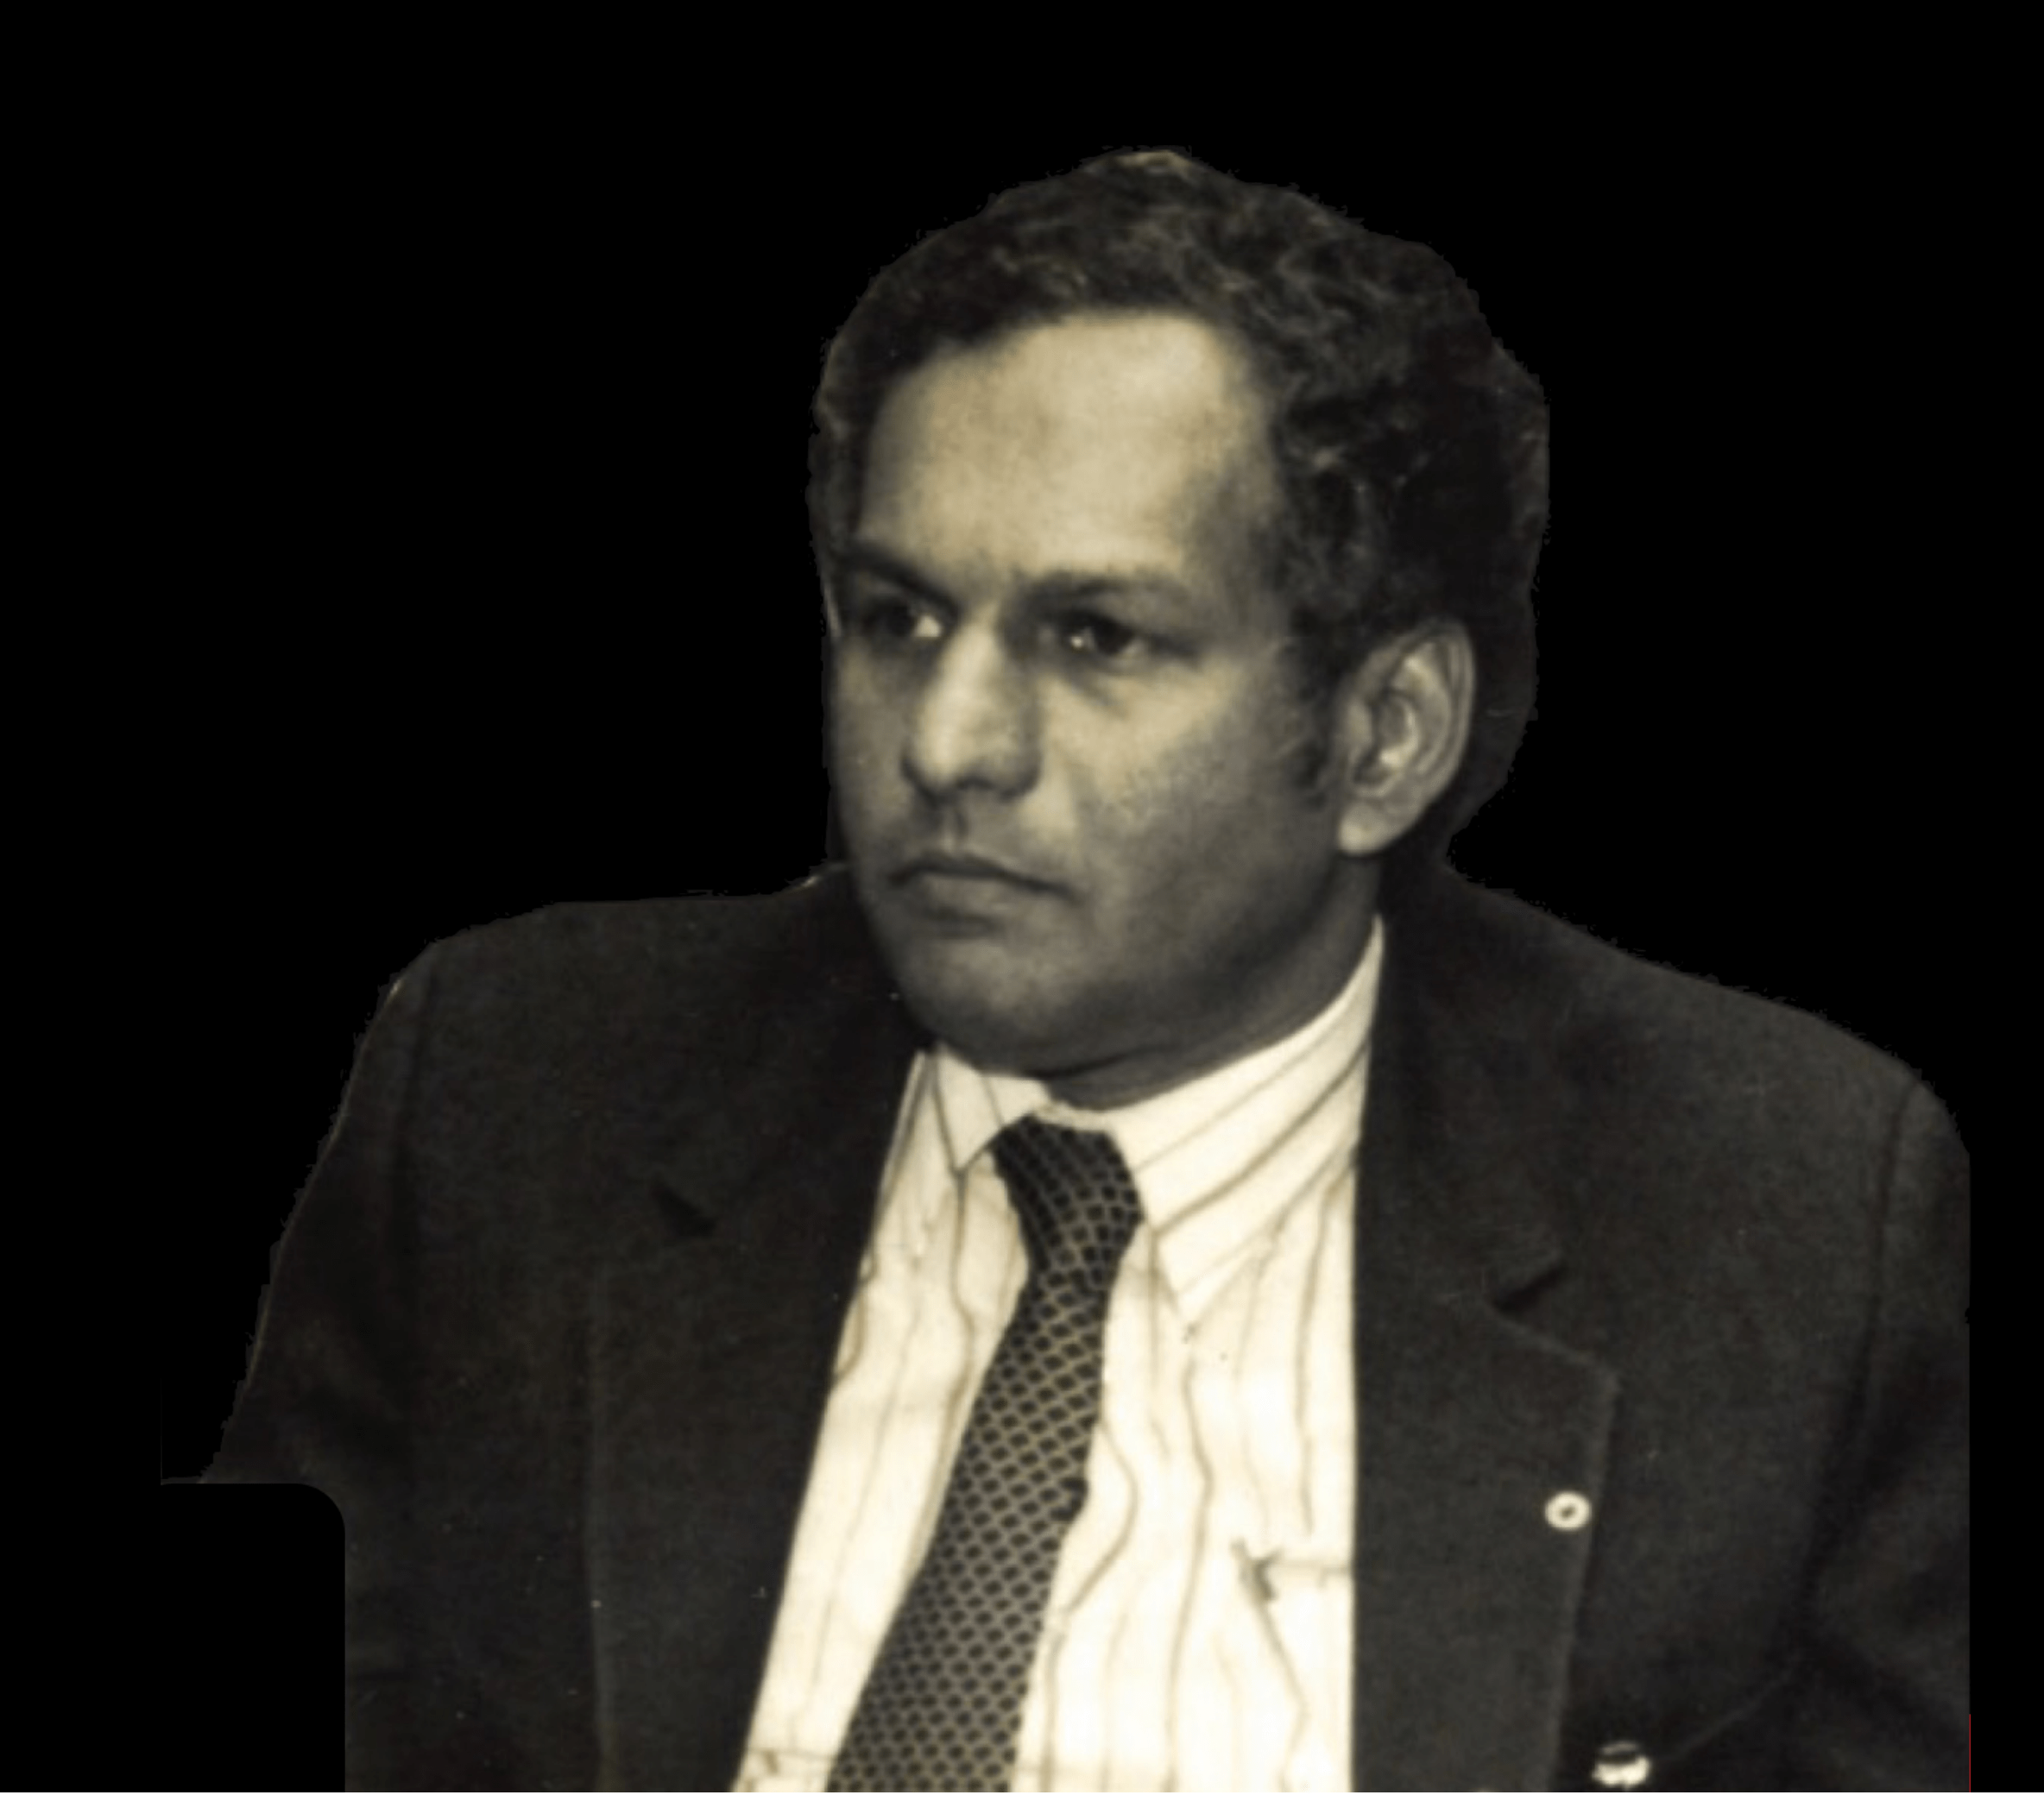 Remembering Law Professor and Peacebuilder Neelan Tiruchelvam on the 25th Anniversary of His Assassination